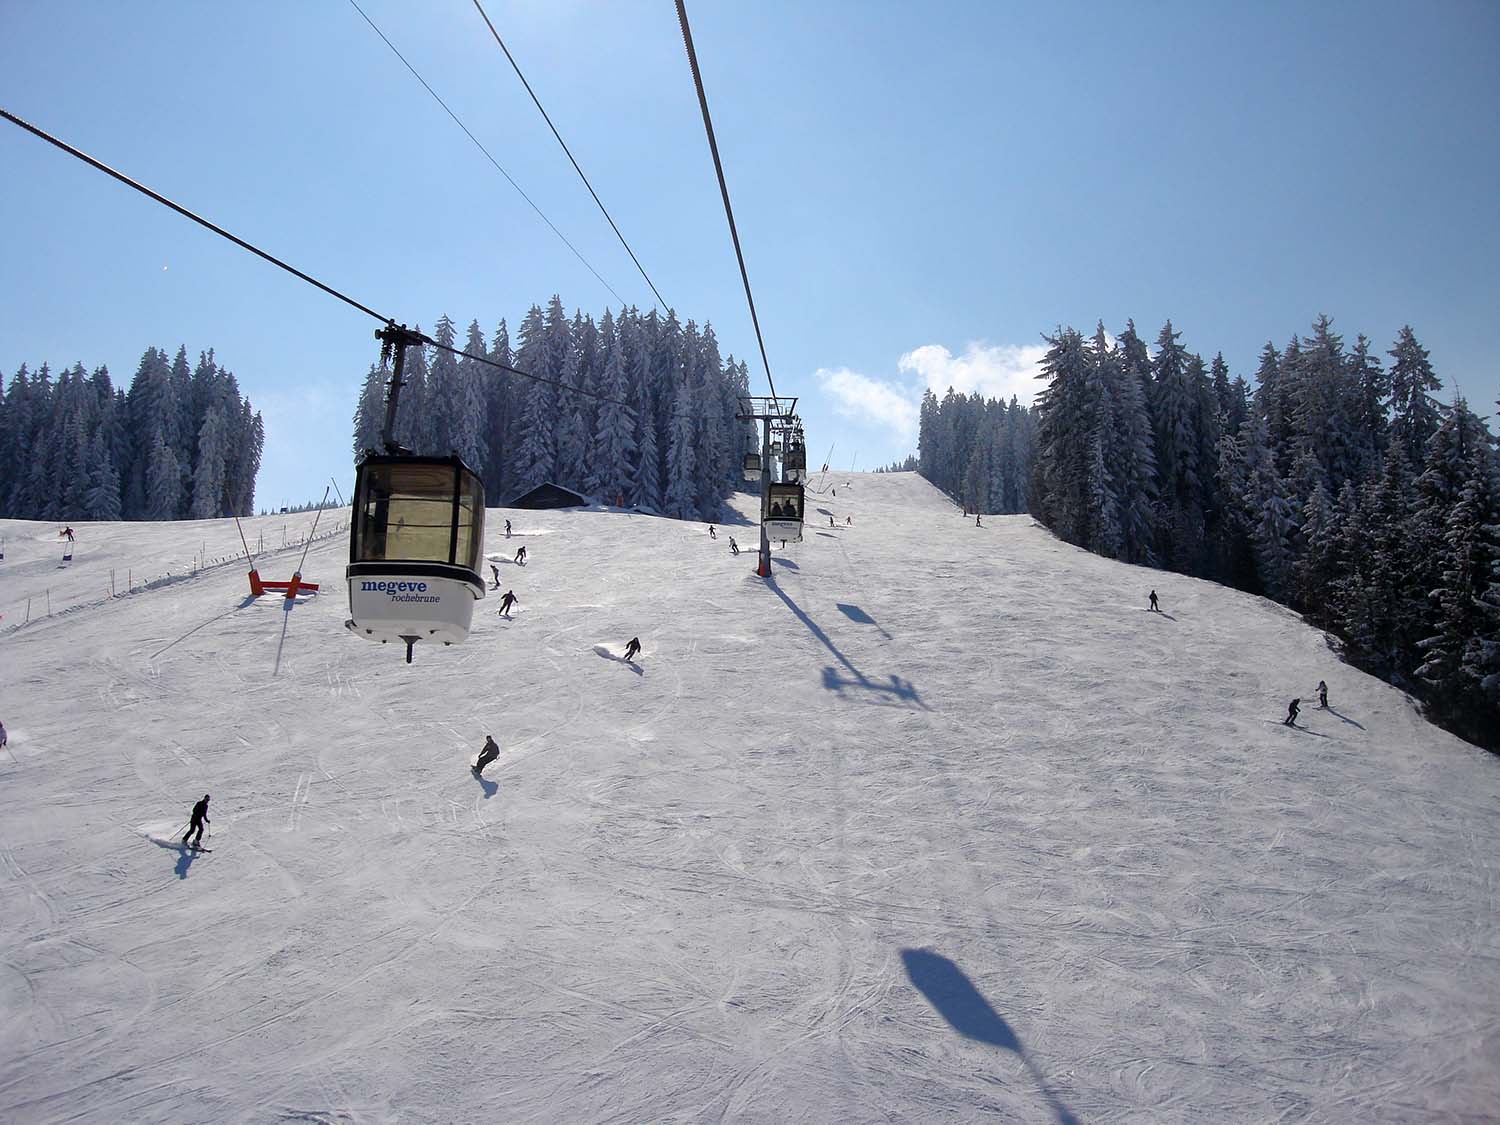 Ski Megeve